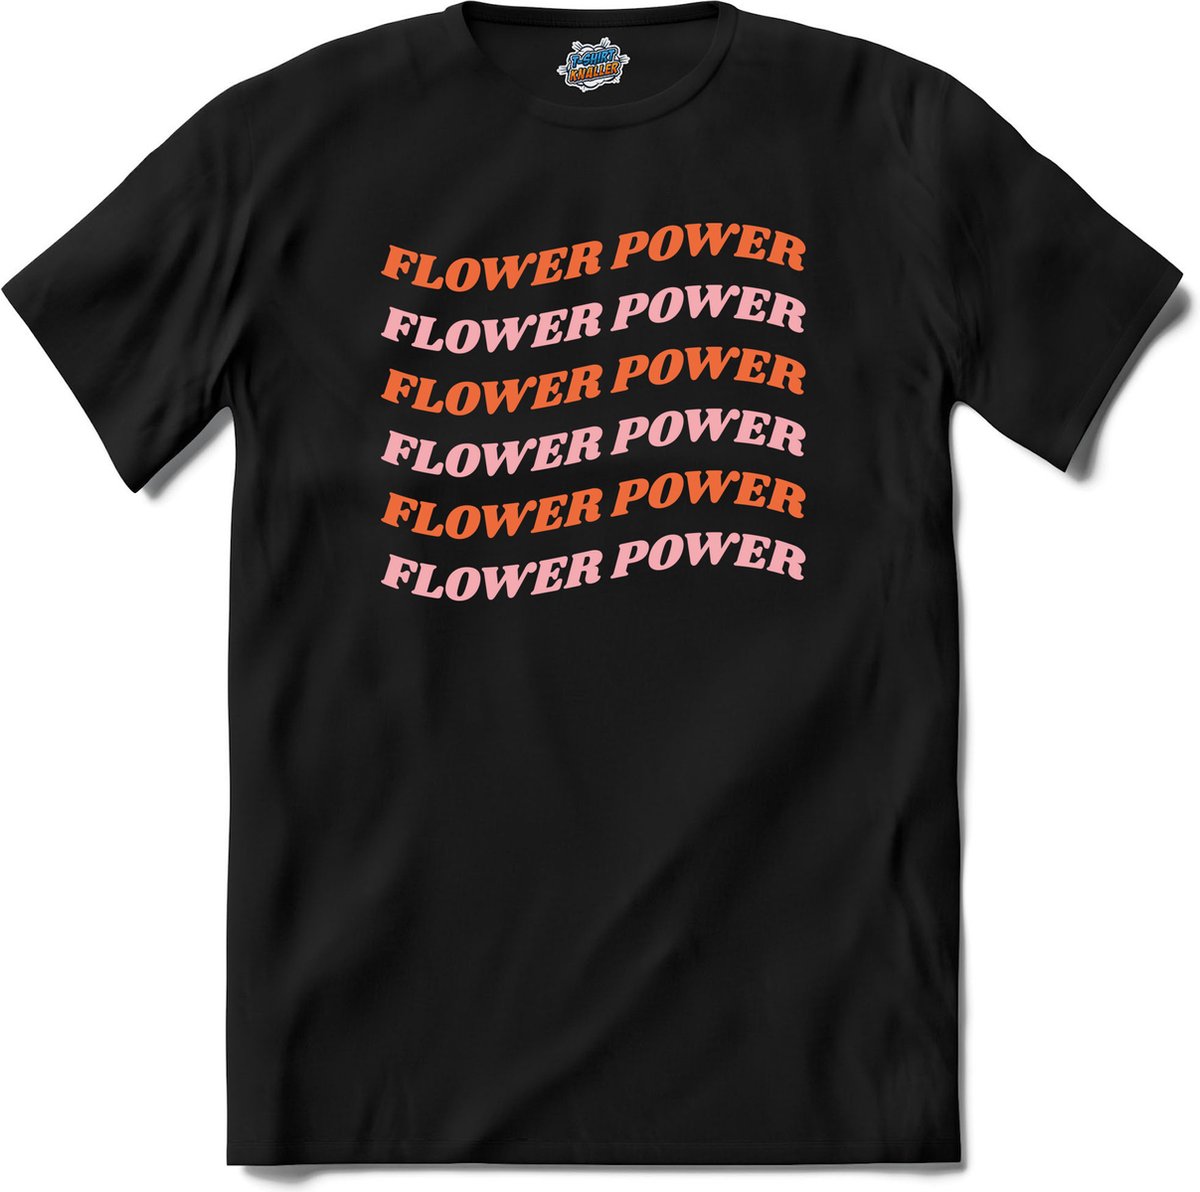 Flower power - T-Shirt - Meisjes - Zwart - Maat 4 jaar